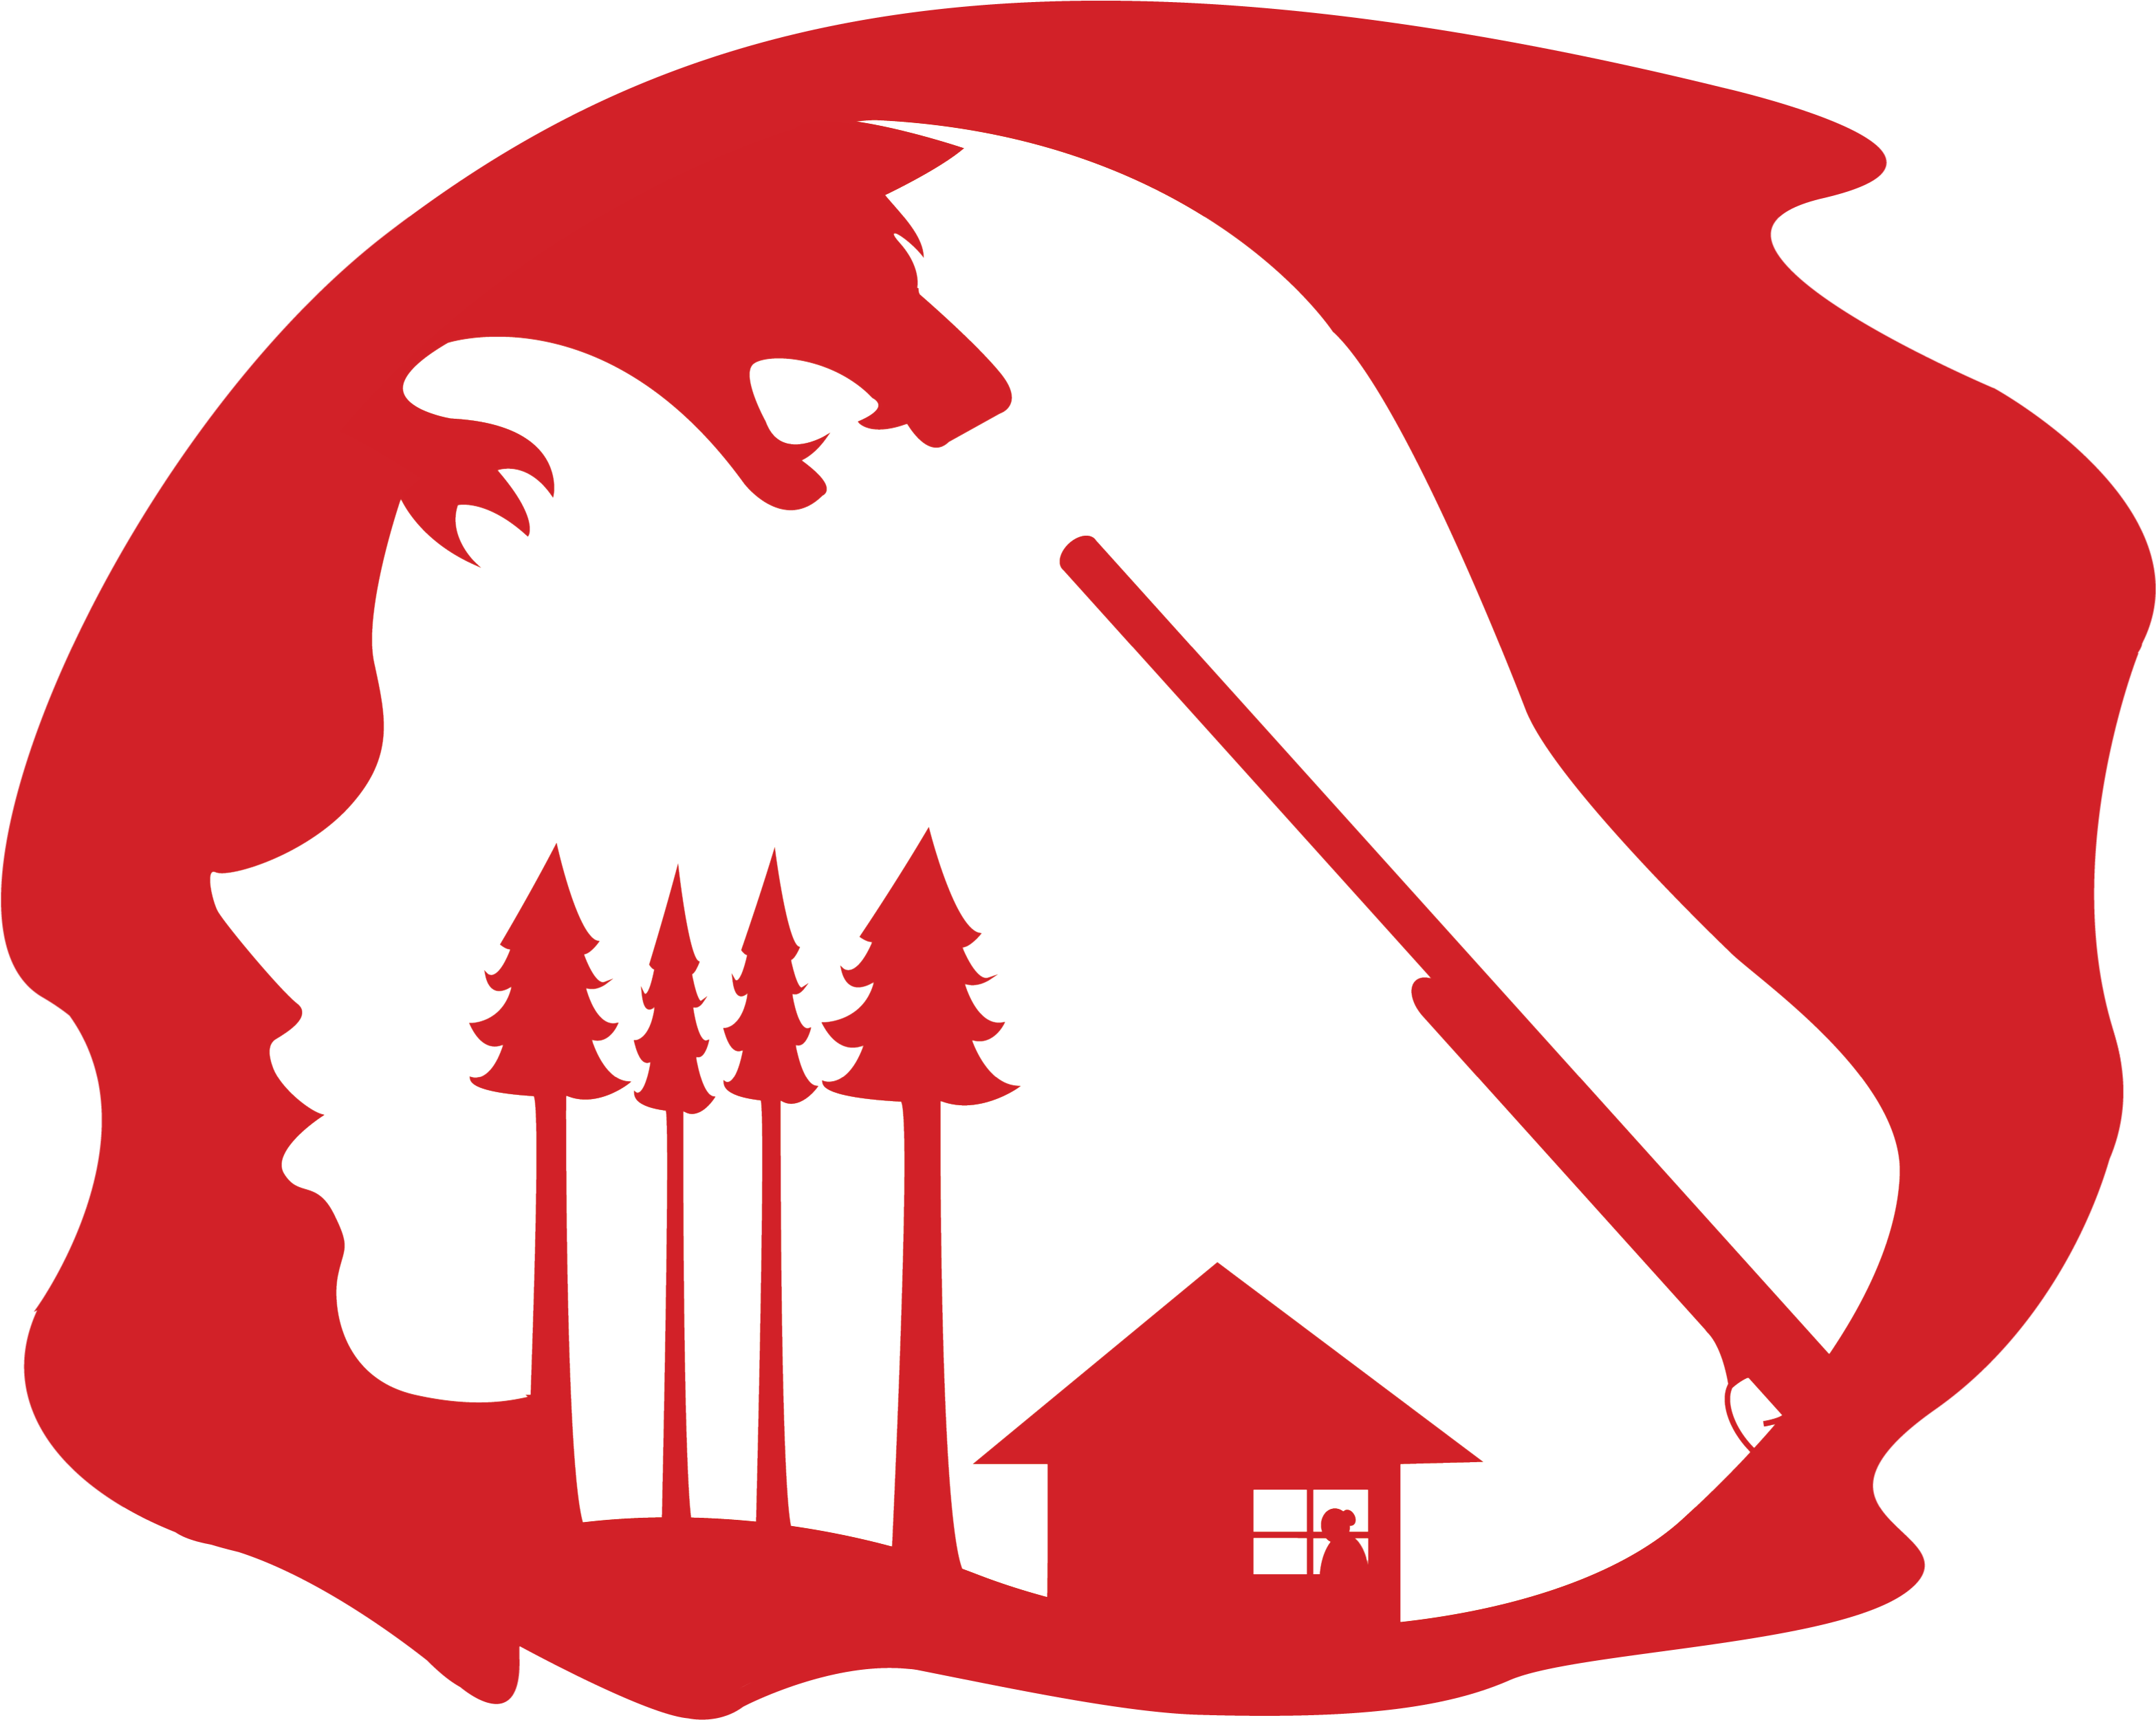 Dwyo - Red Riding Hood Logo (3300x2550)